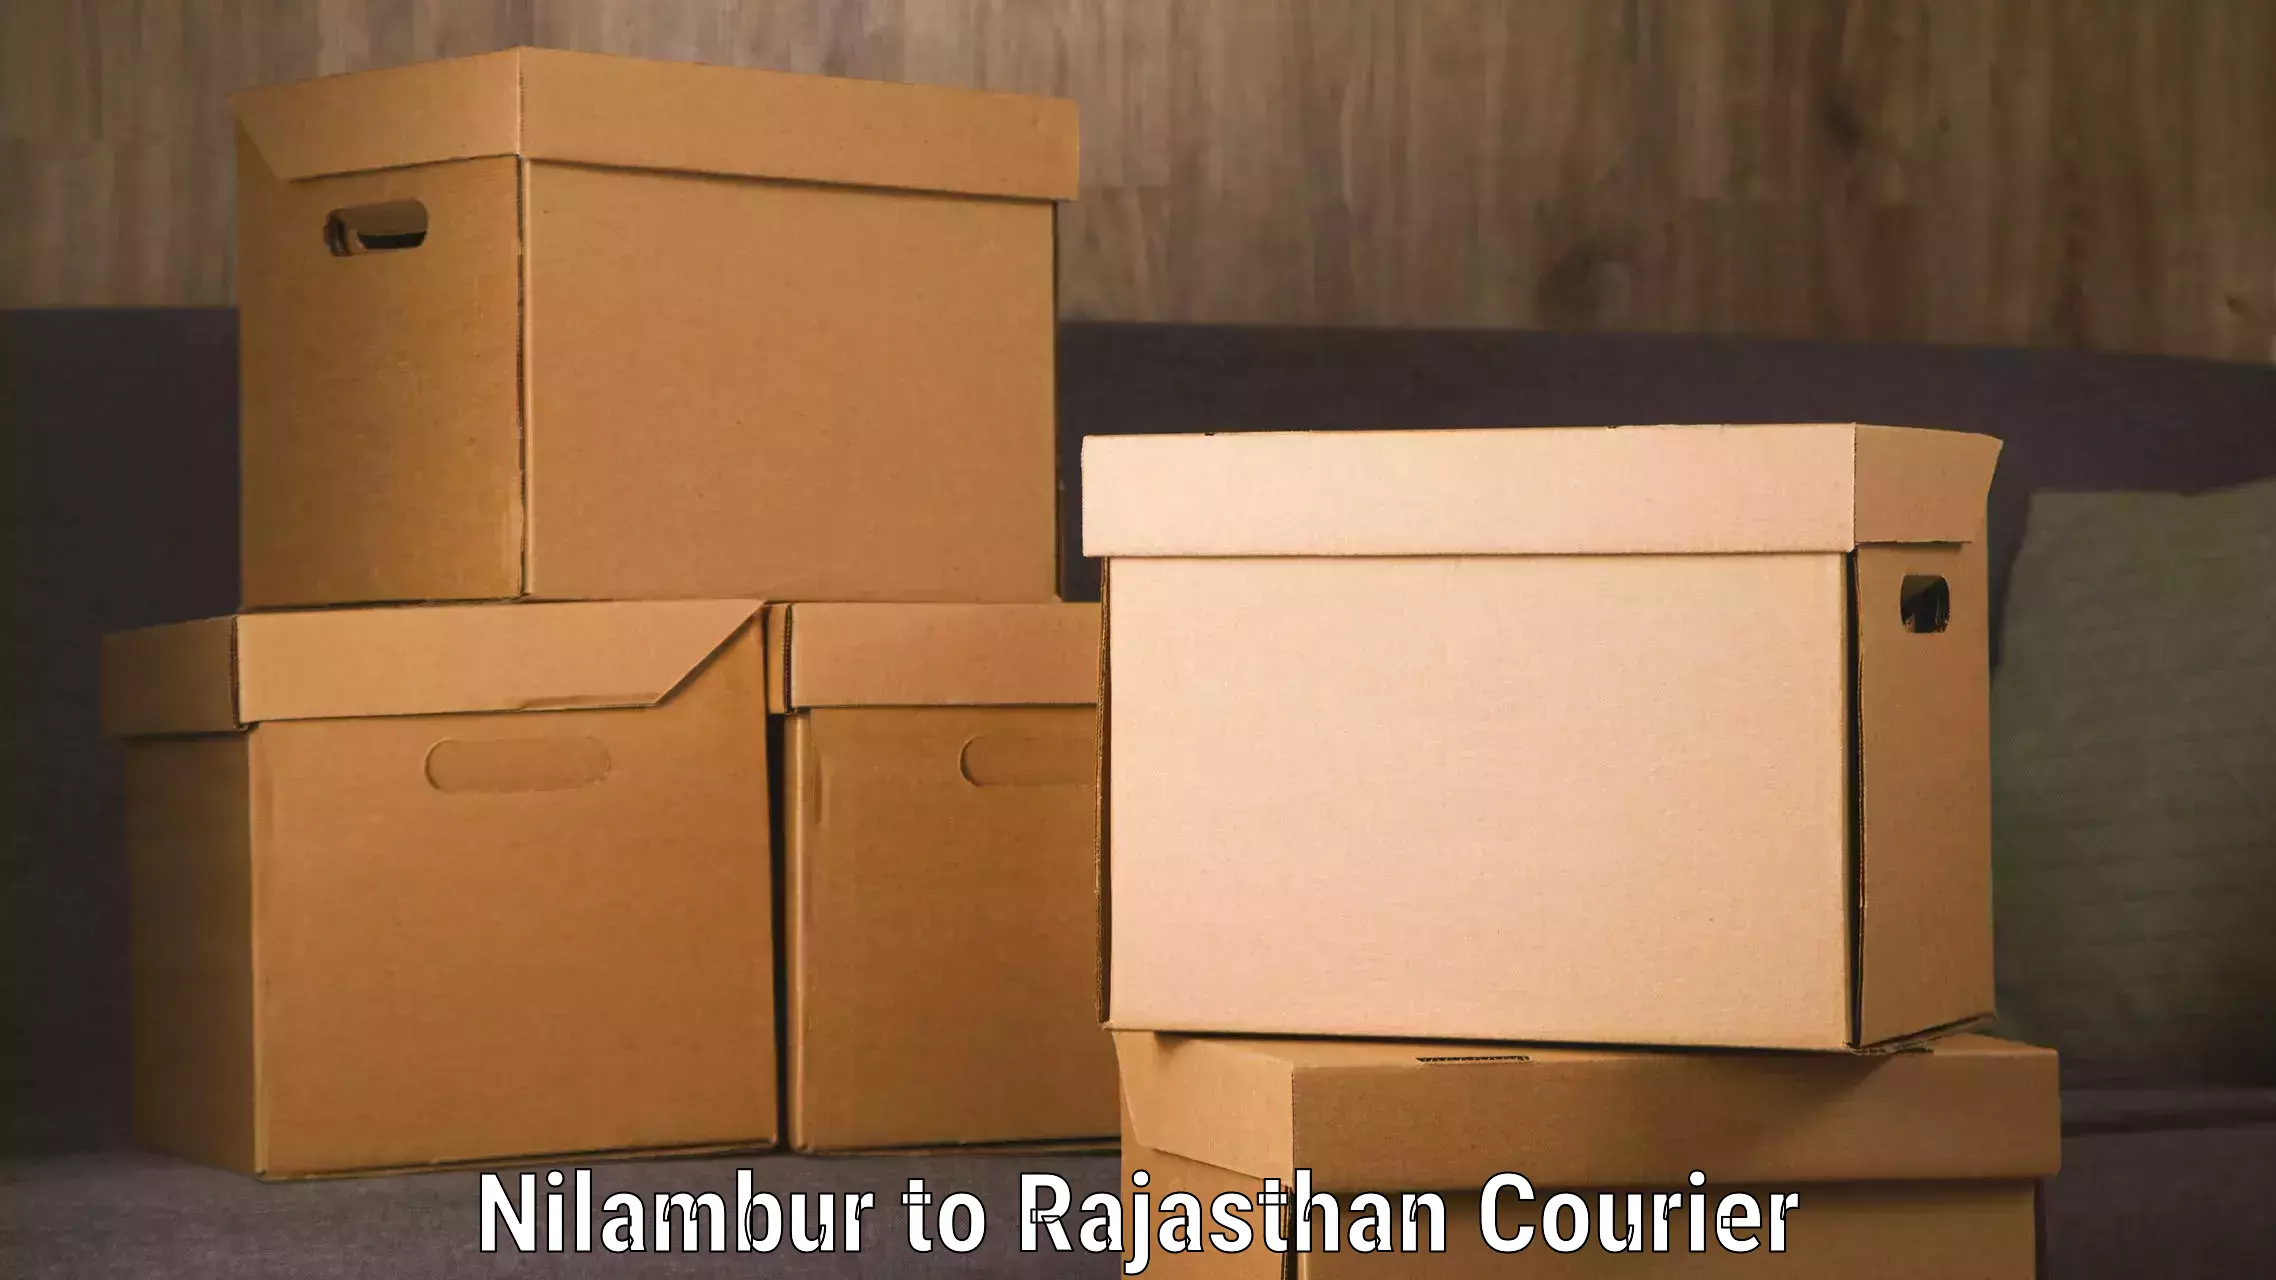 Digital courier platforms Nilambur to Ghator